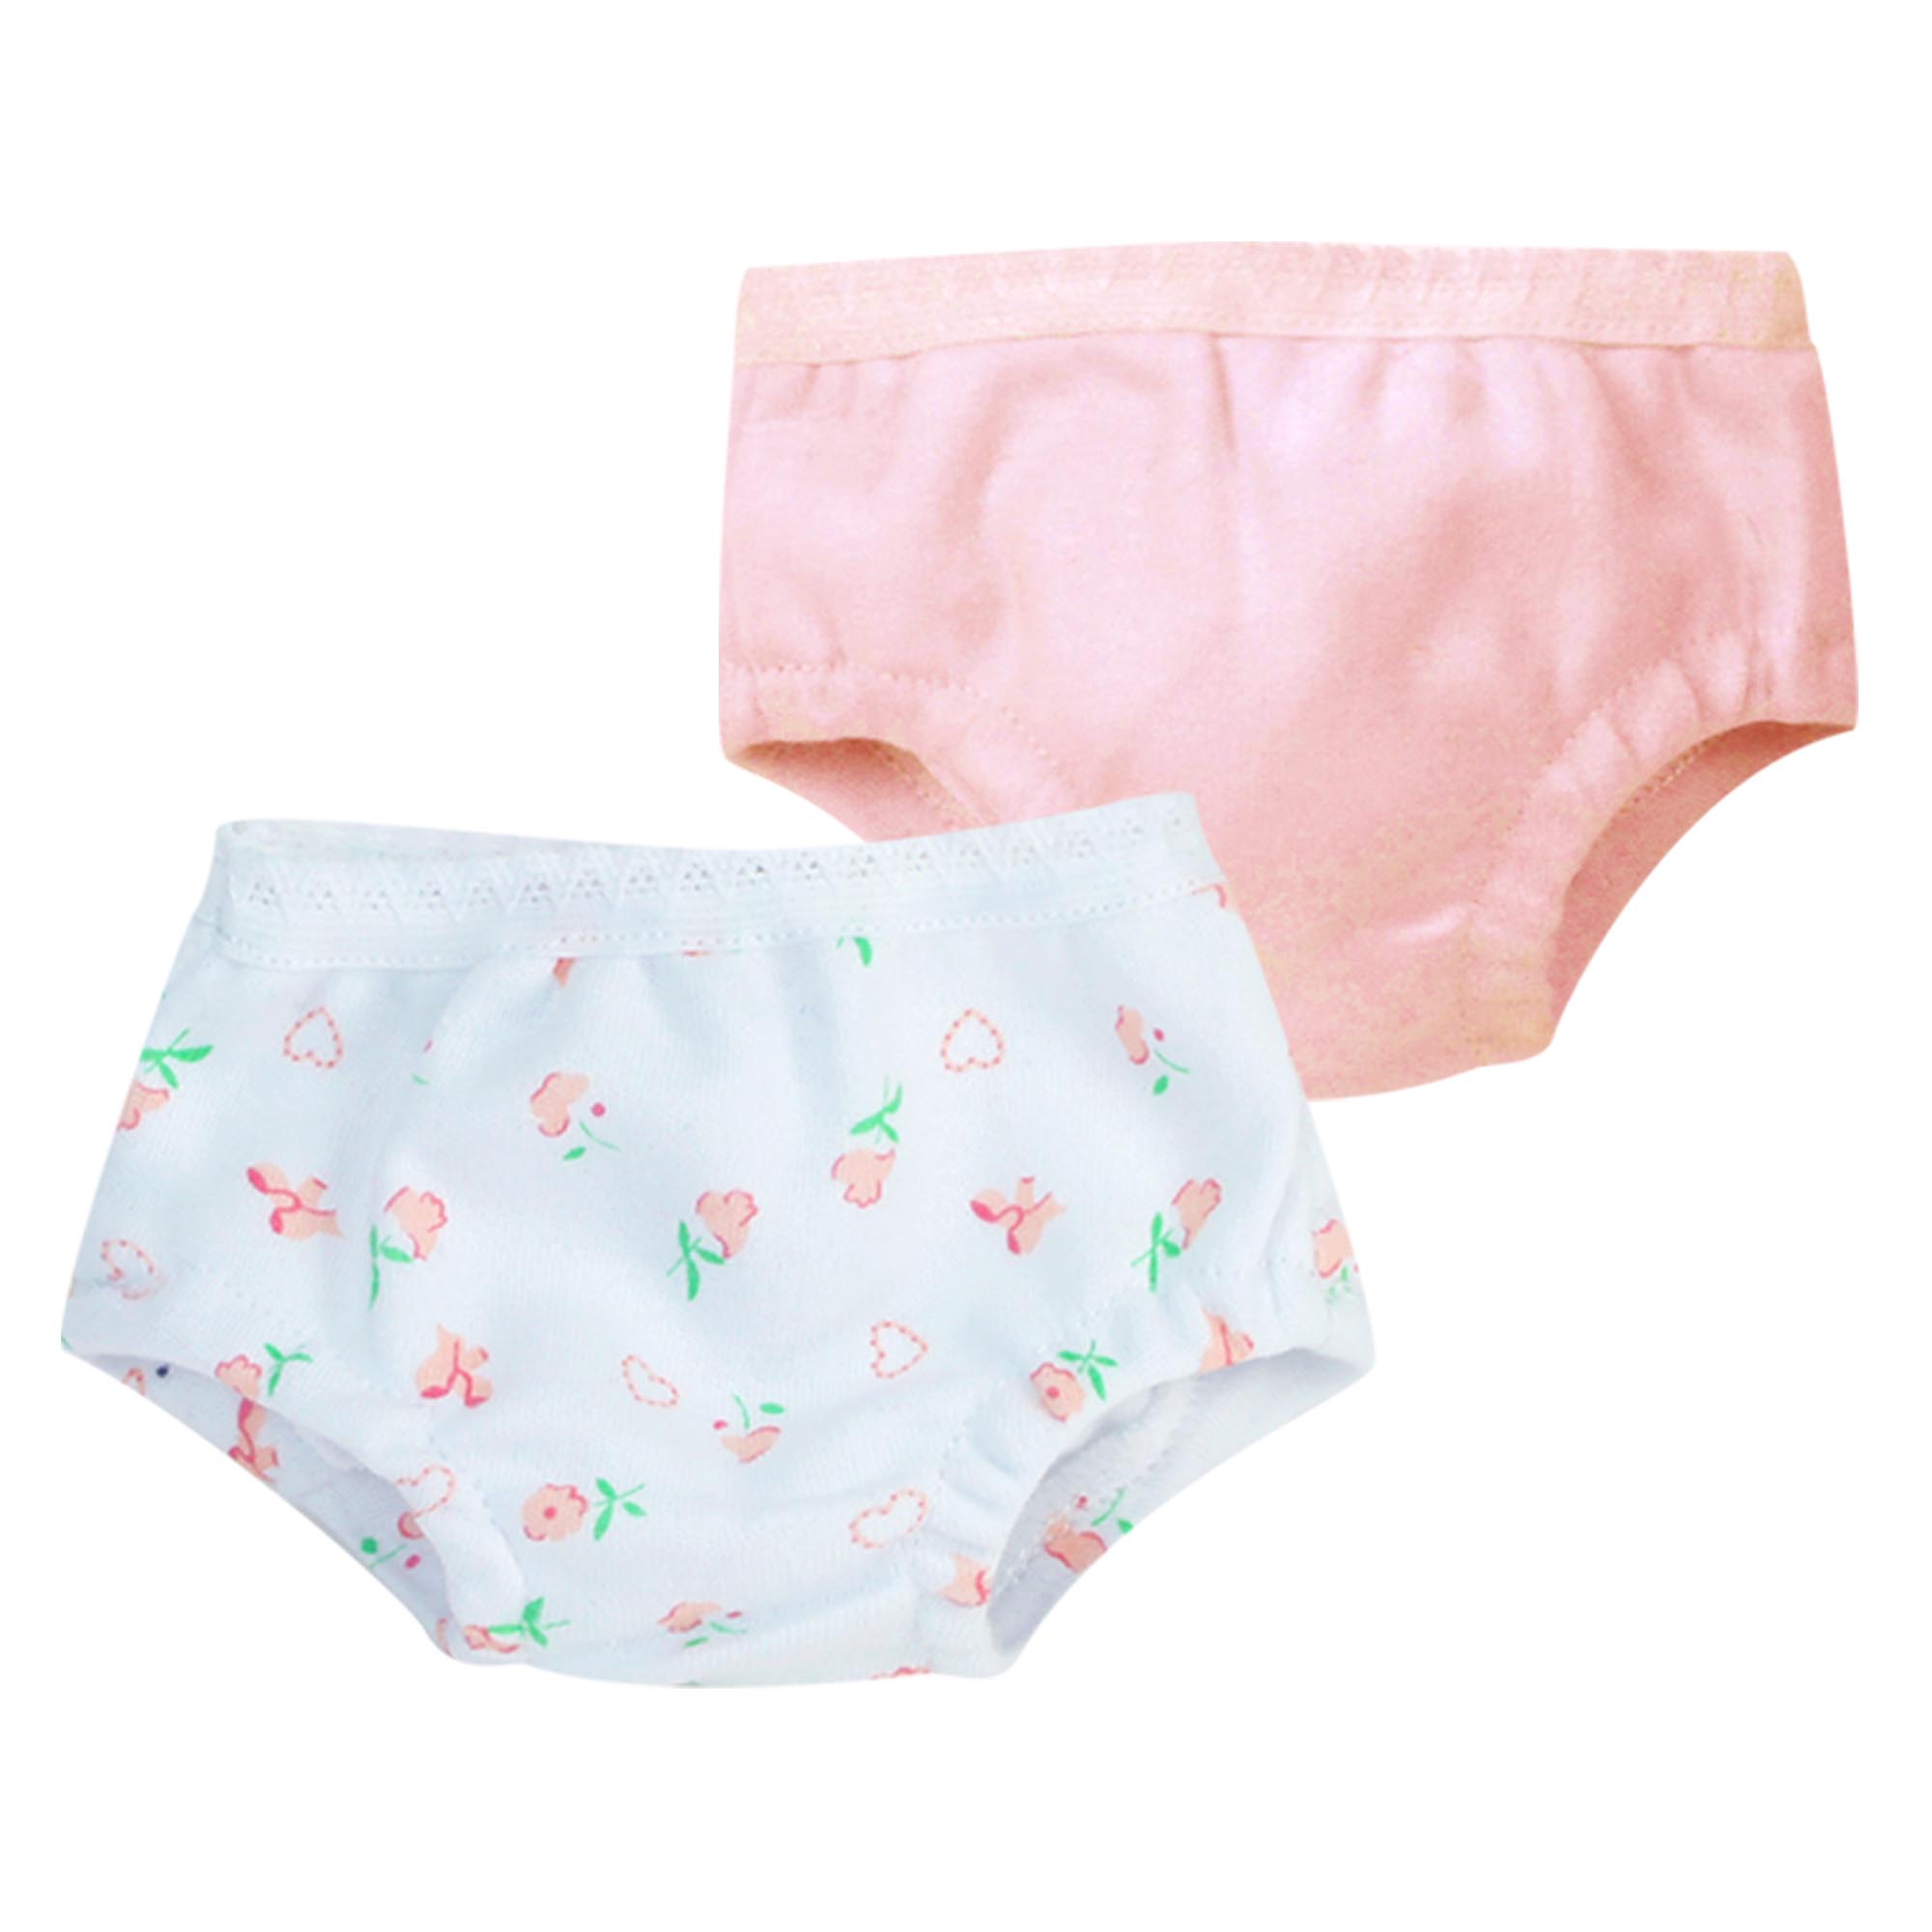 Sophia's Underwear Set for 18'' Dolls, White/Pink